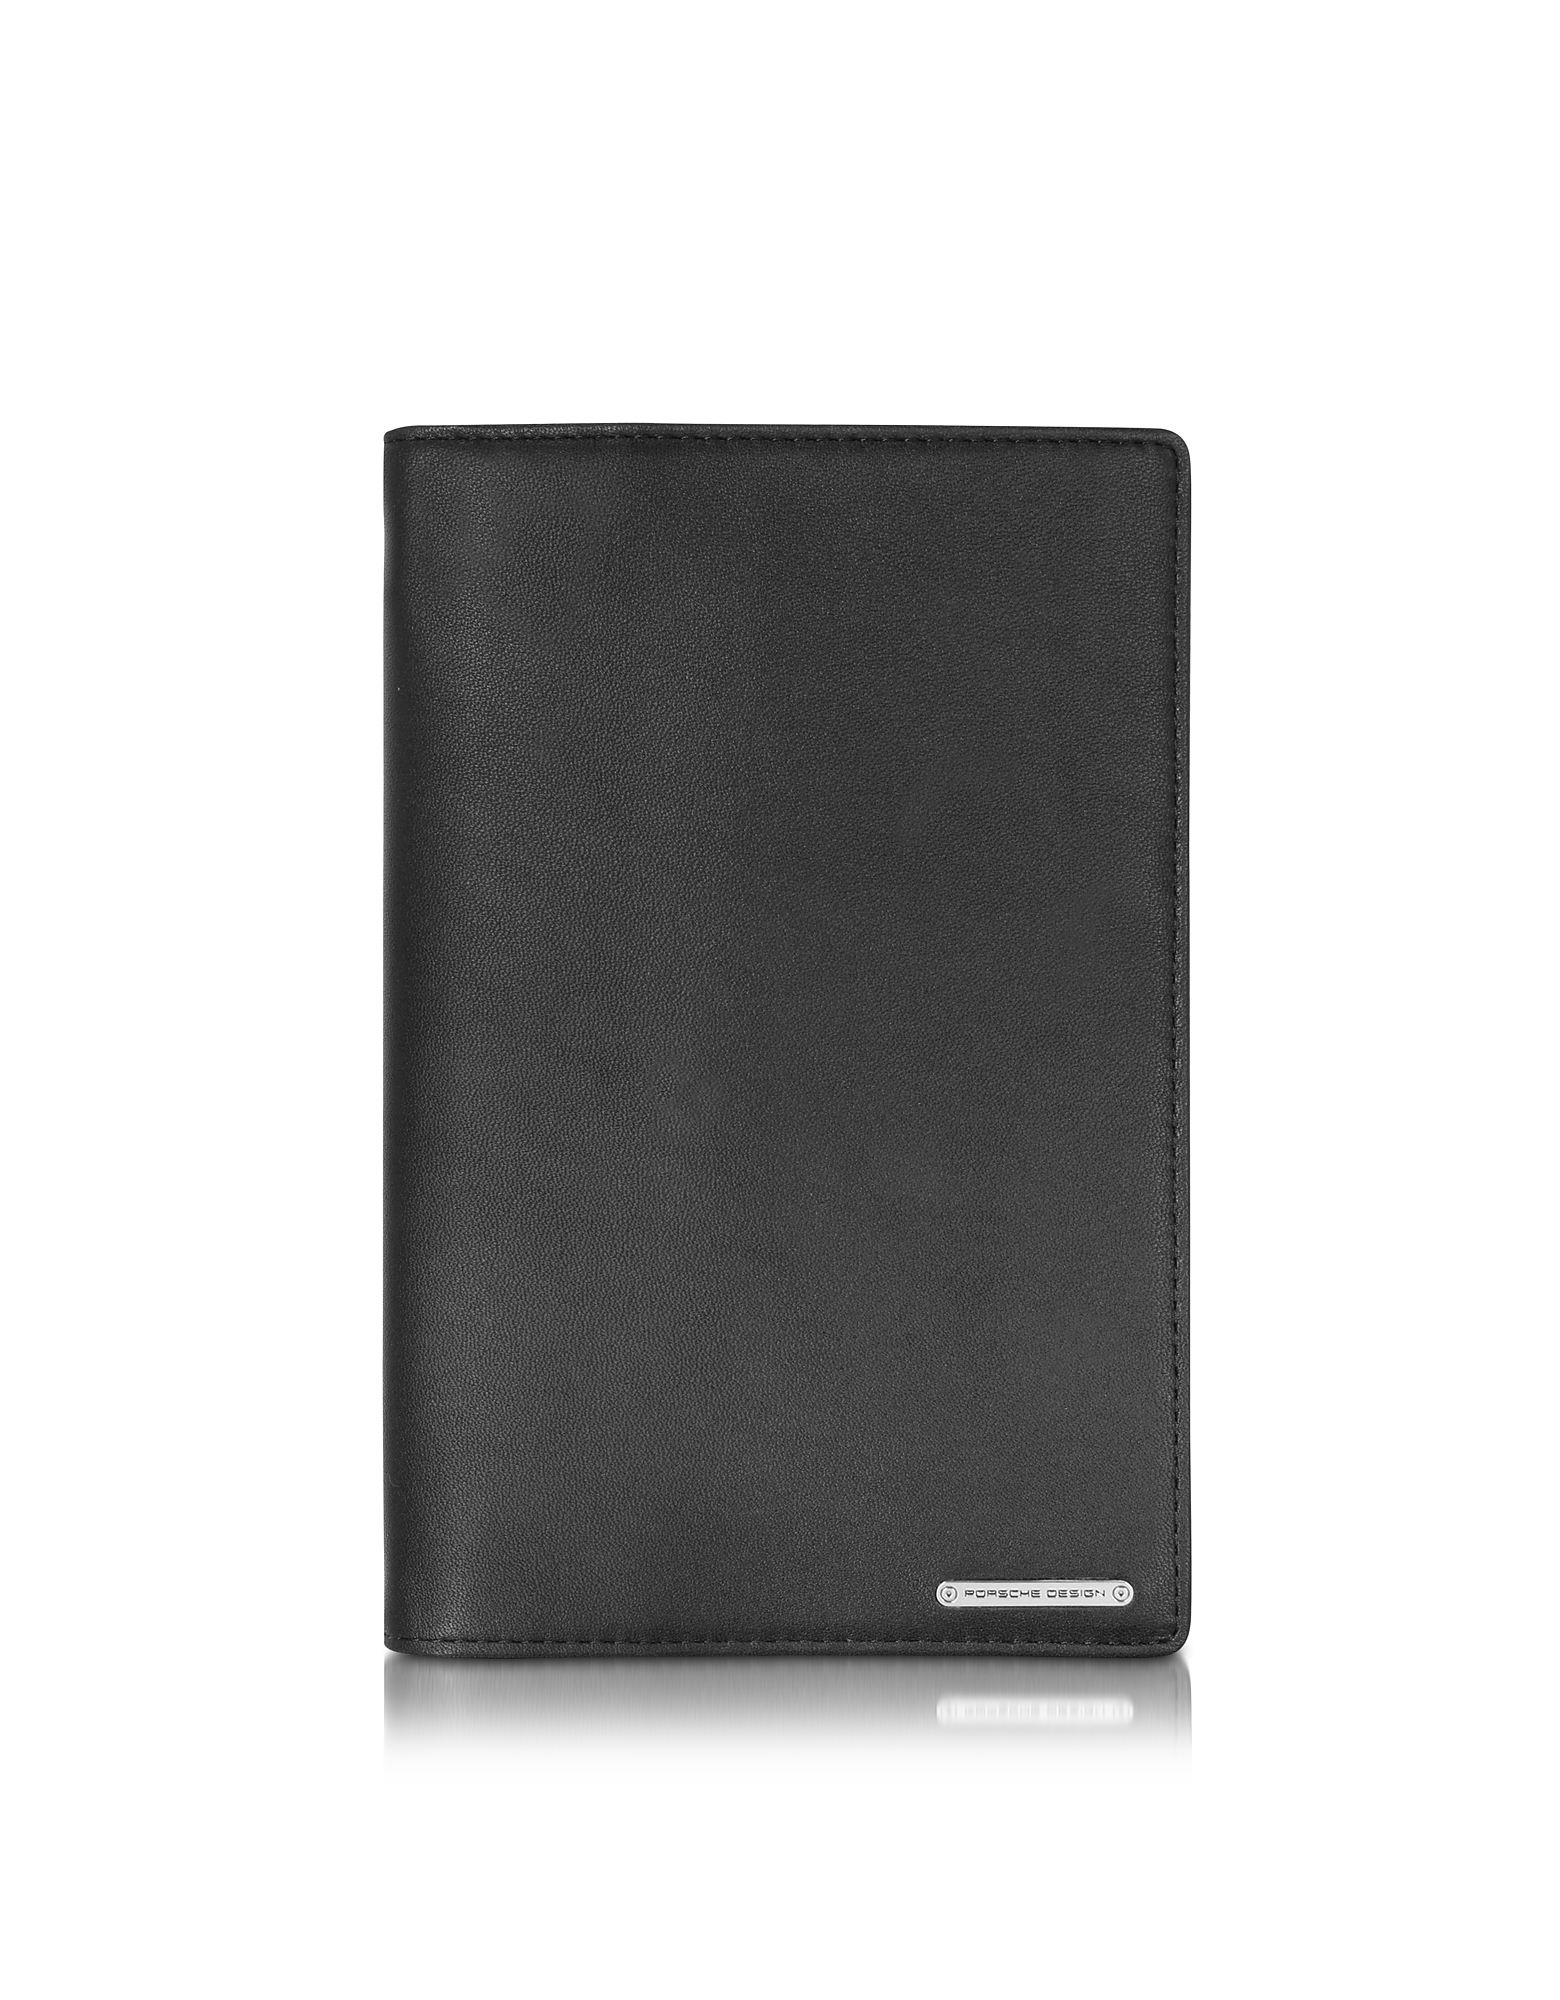 Porsche Design CL 2.0 Black Large Leather Travel Wallet w/Zip Pocket